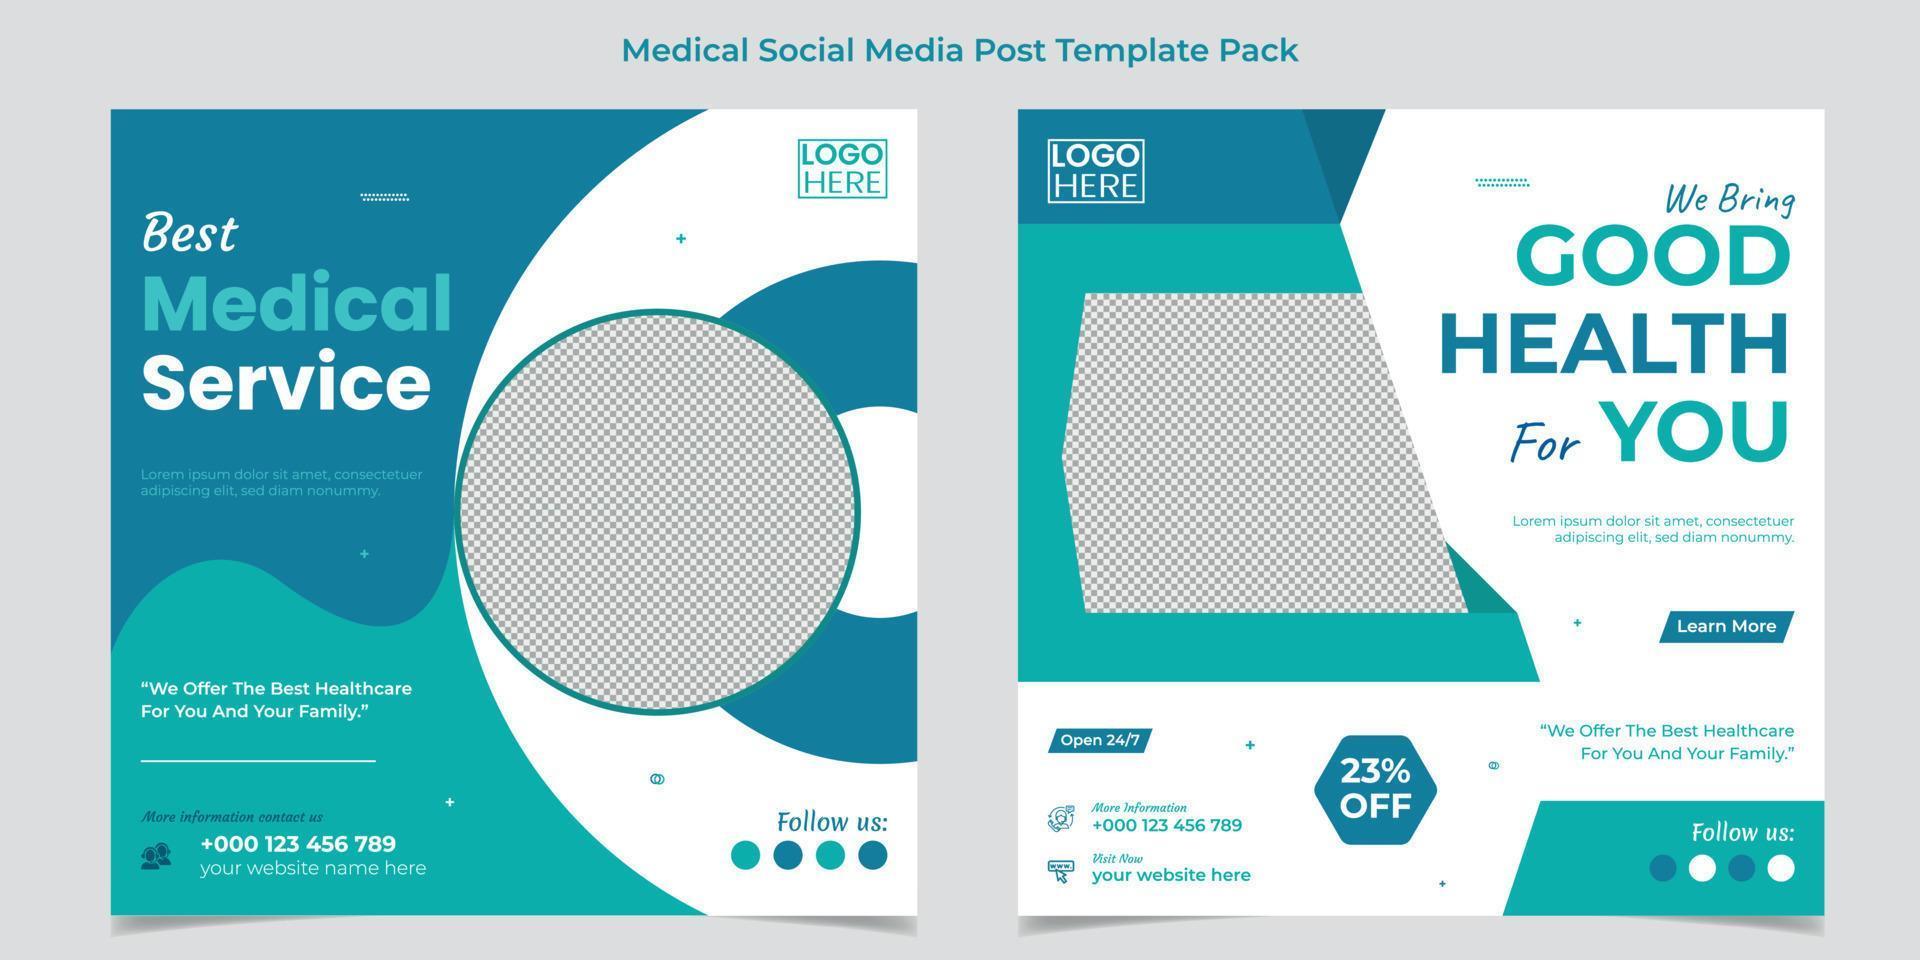 Medical healthcare web banner or square flyer or social media post template design vector